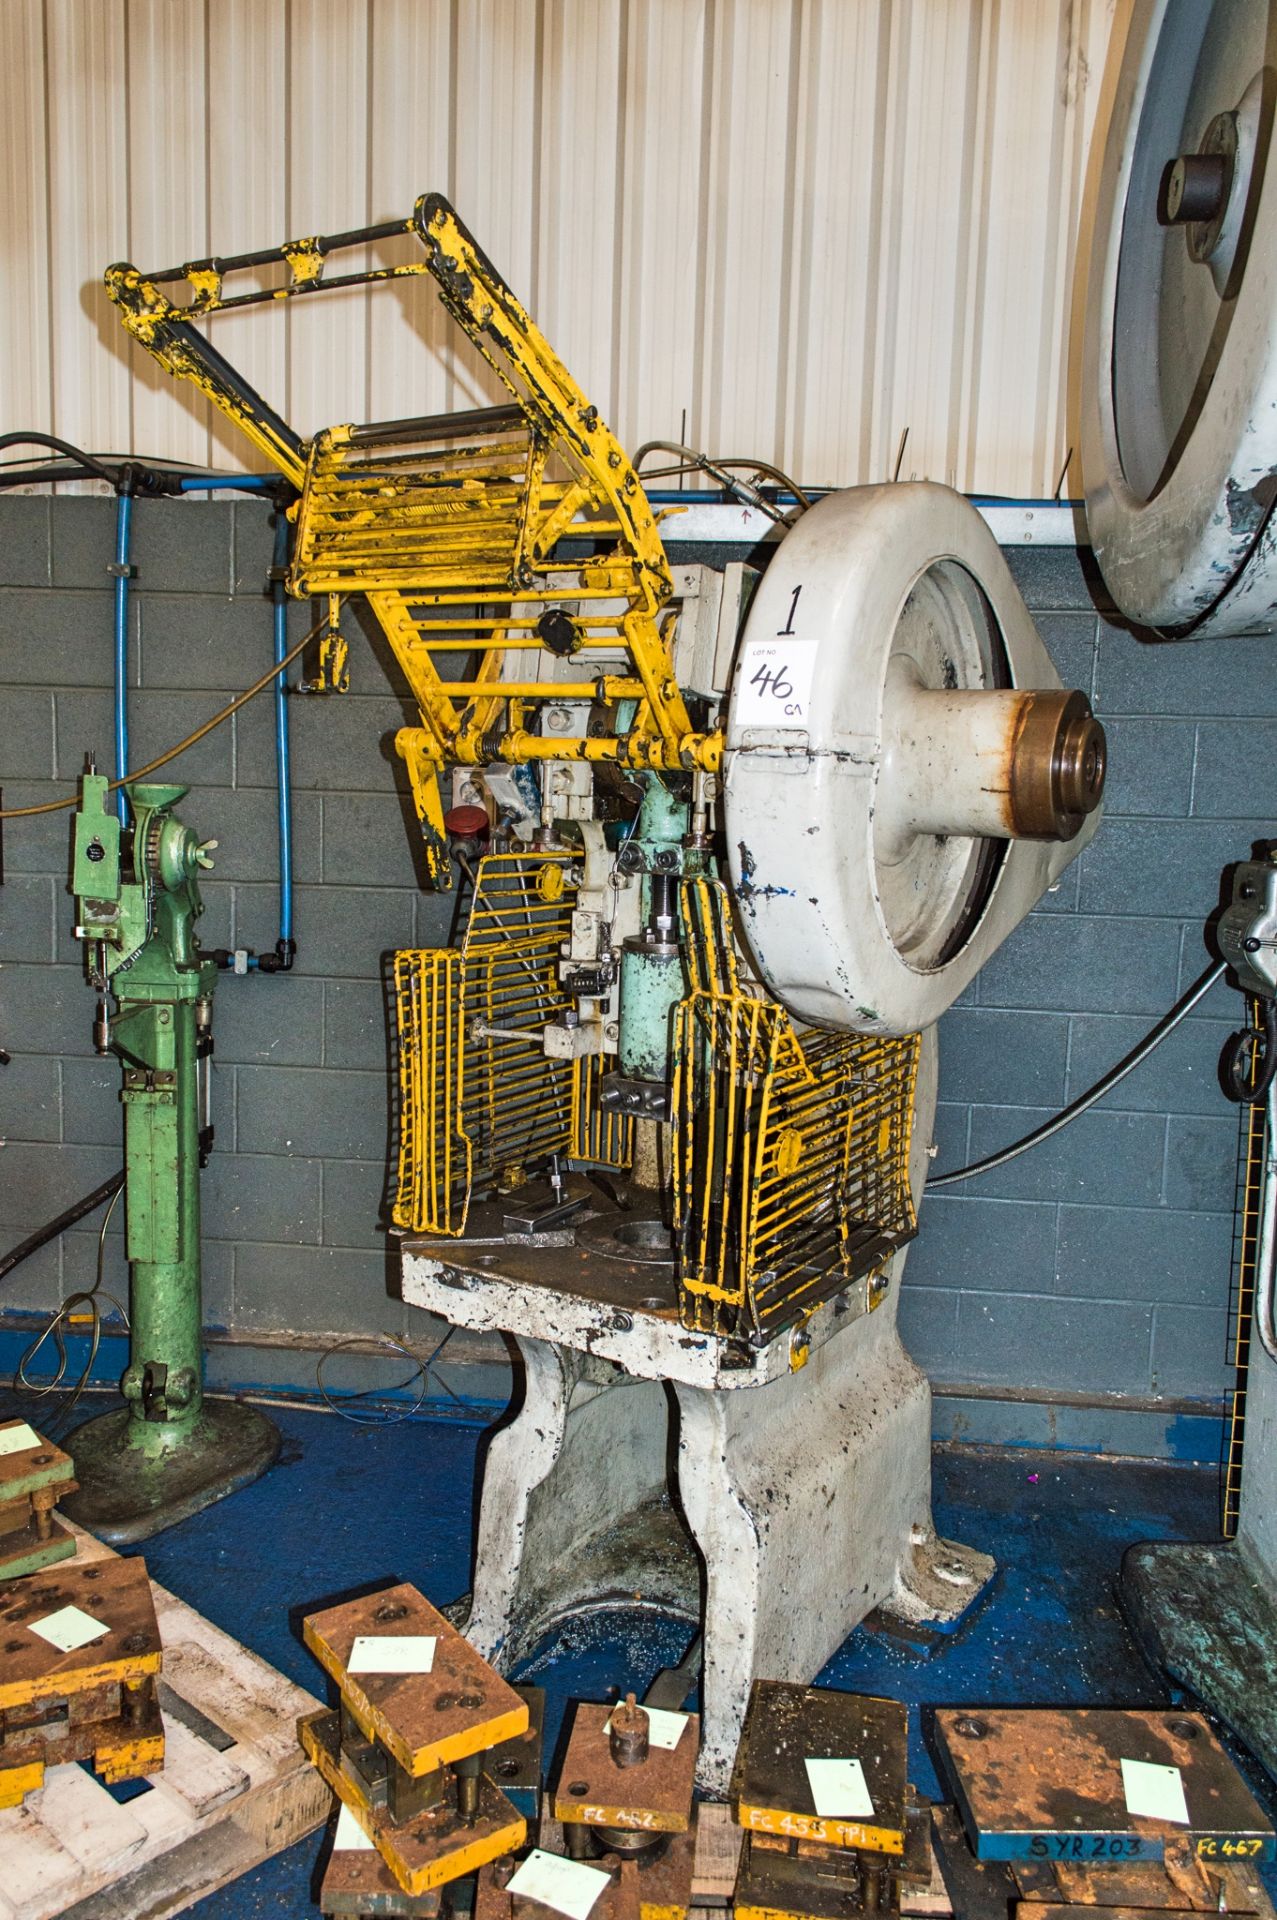 Sweeney & Blocksidge No. 9 C frame mechanical power press c/w steel guard system and 650mm x 500mm